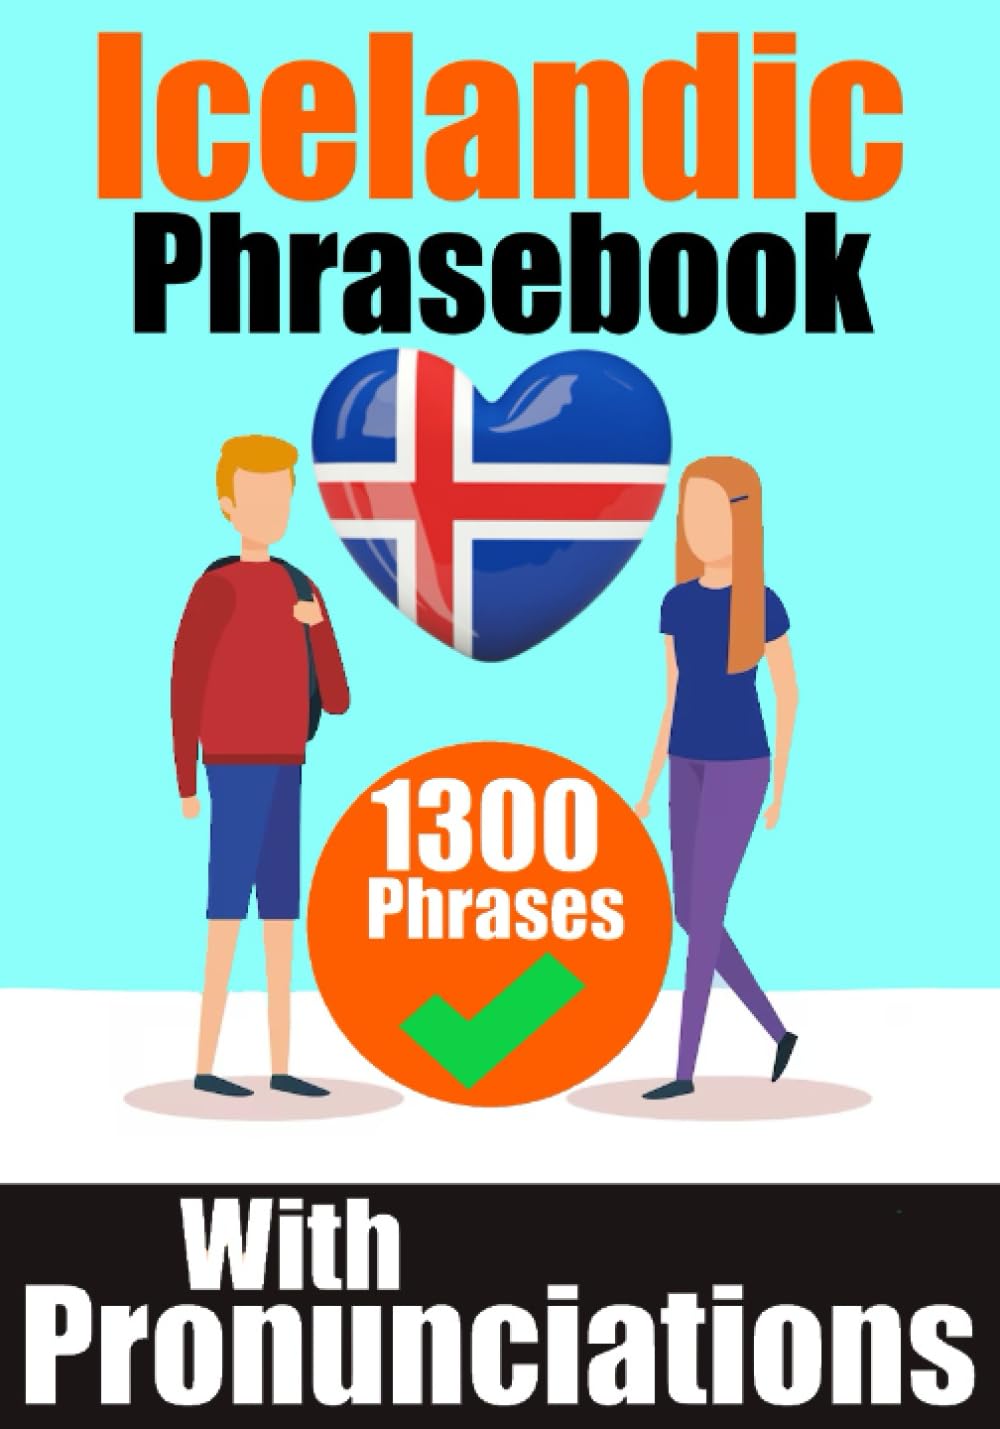 Icelandic Phrasebook: 1300 Sentences with English Translations and Pronunciation Guide - Skriuwer.com